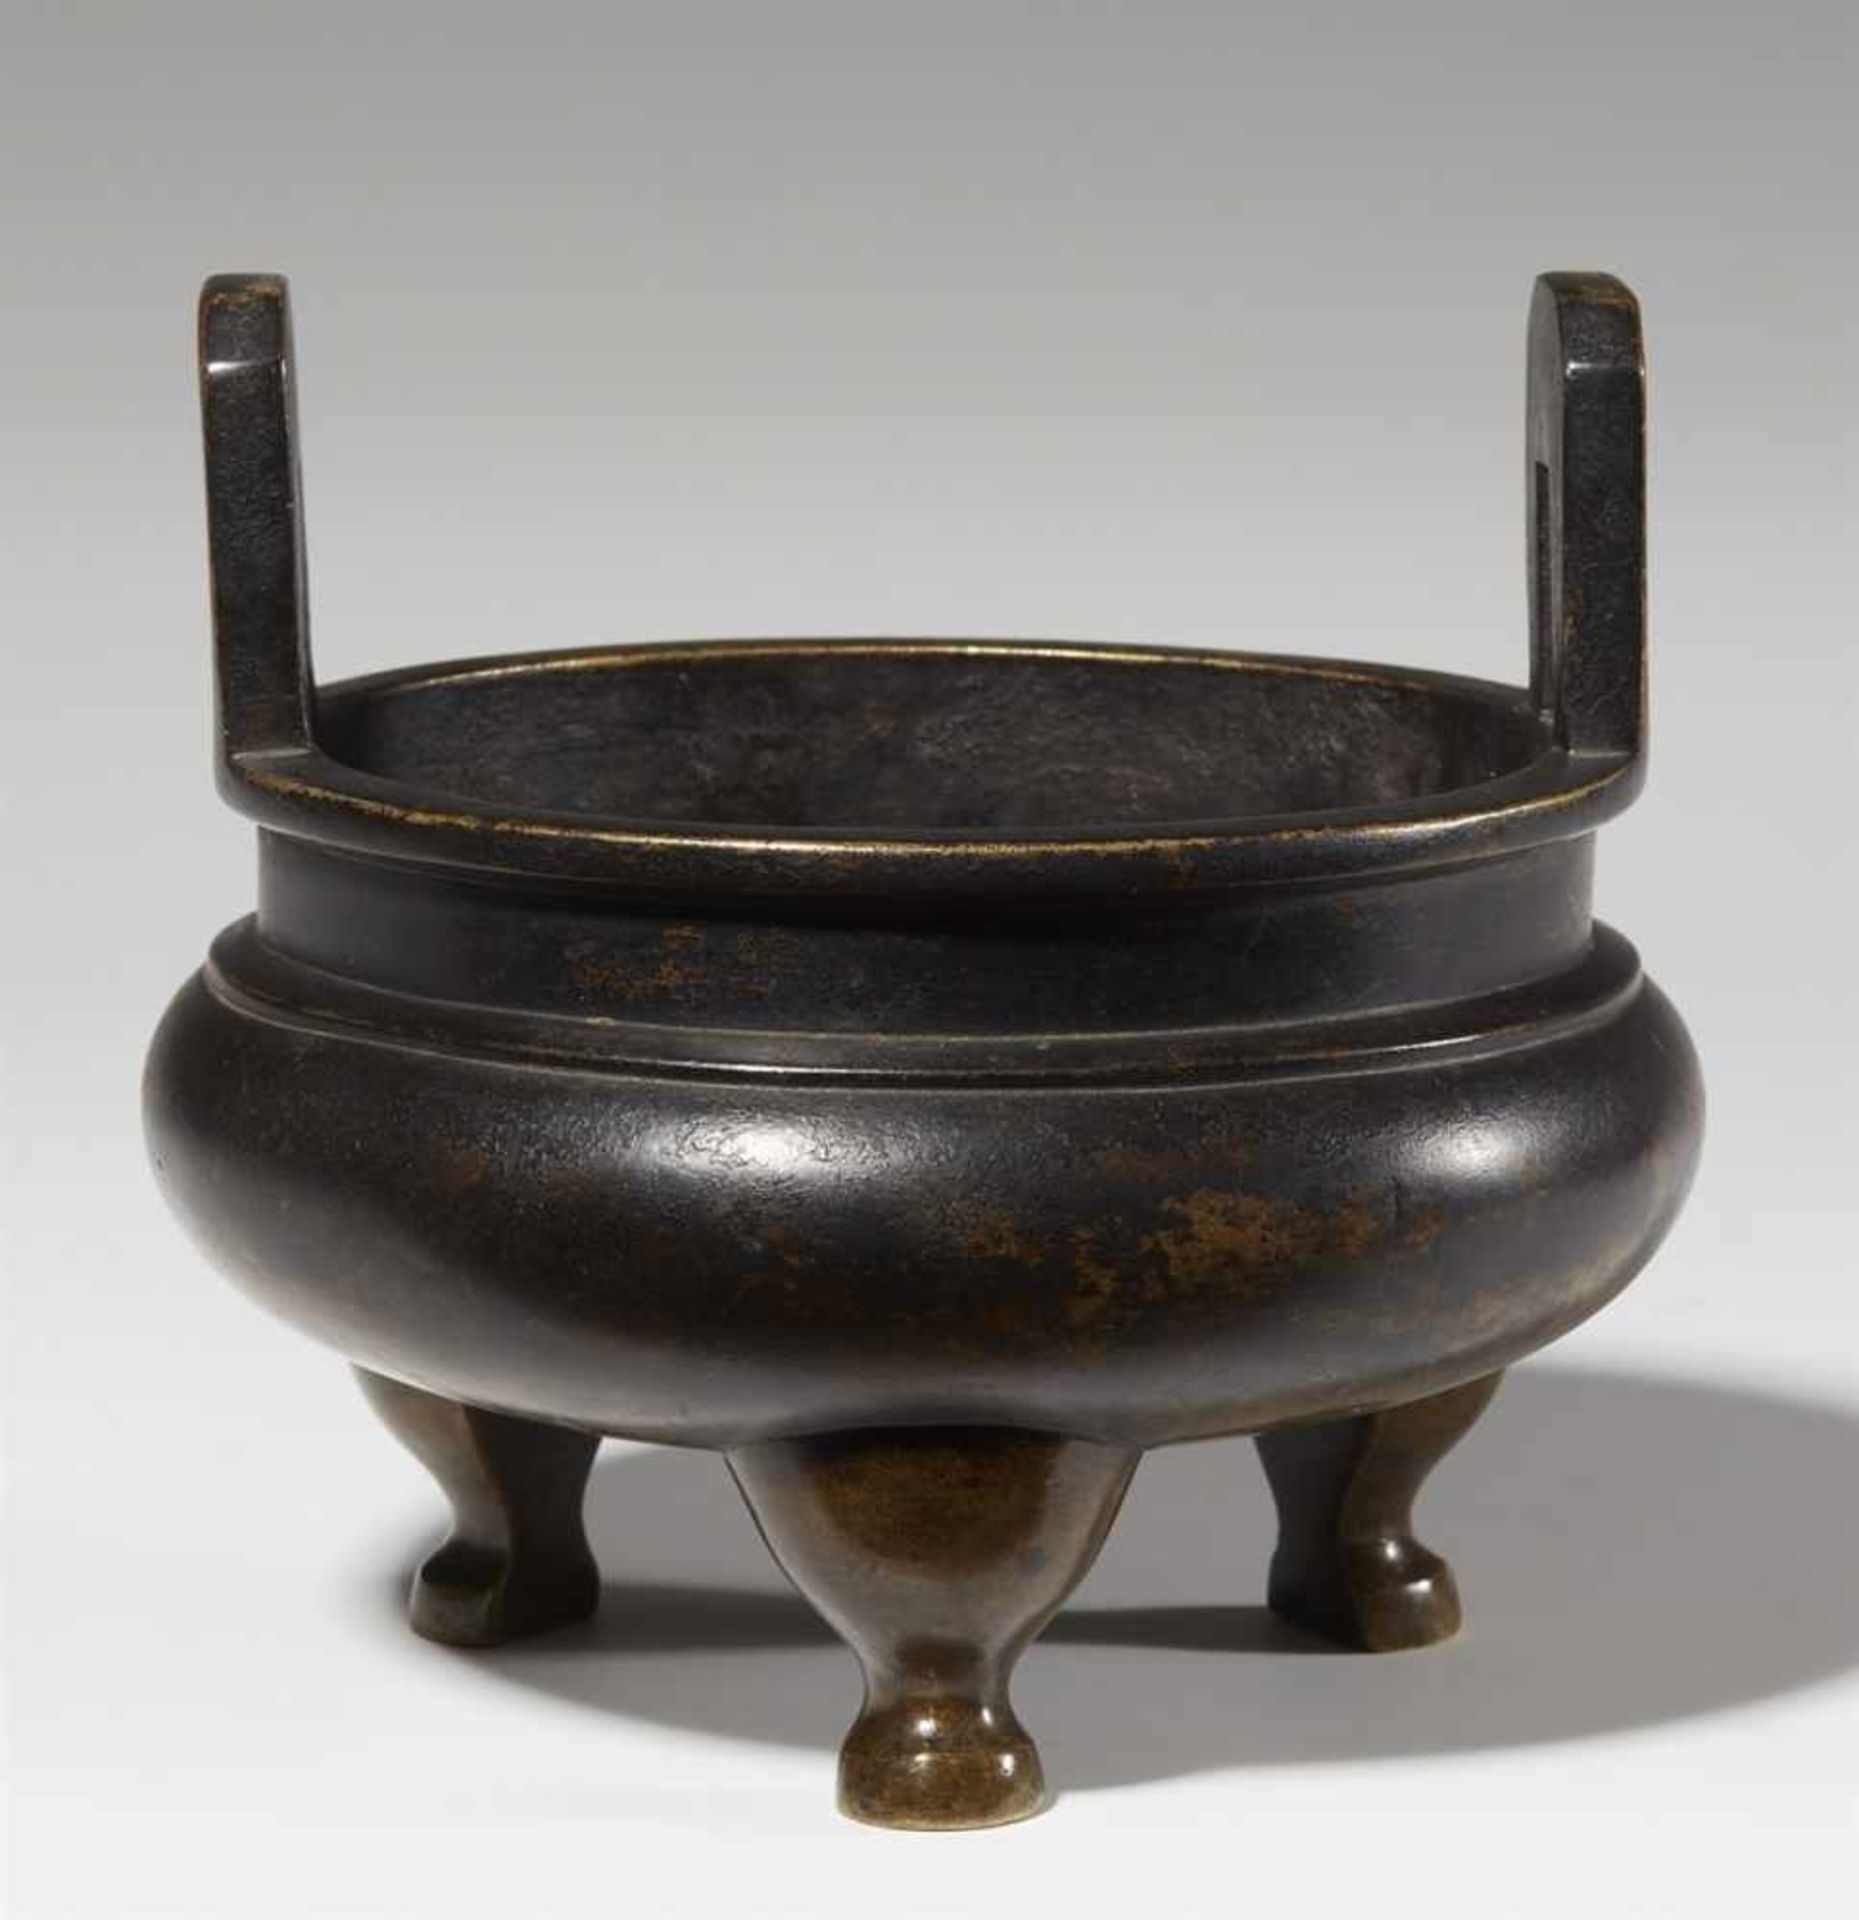 A bronze incense burner. Qing dynasty, 17th/18th century